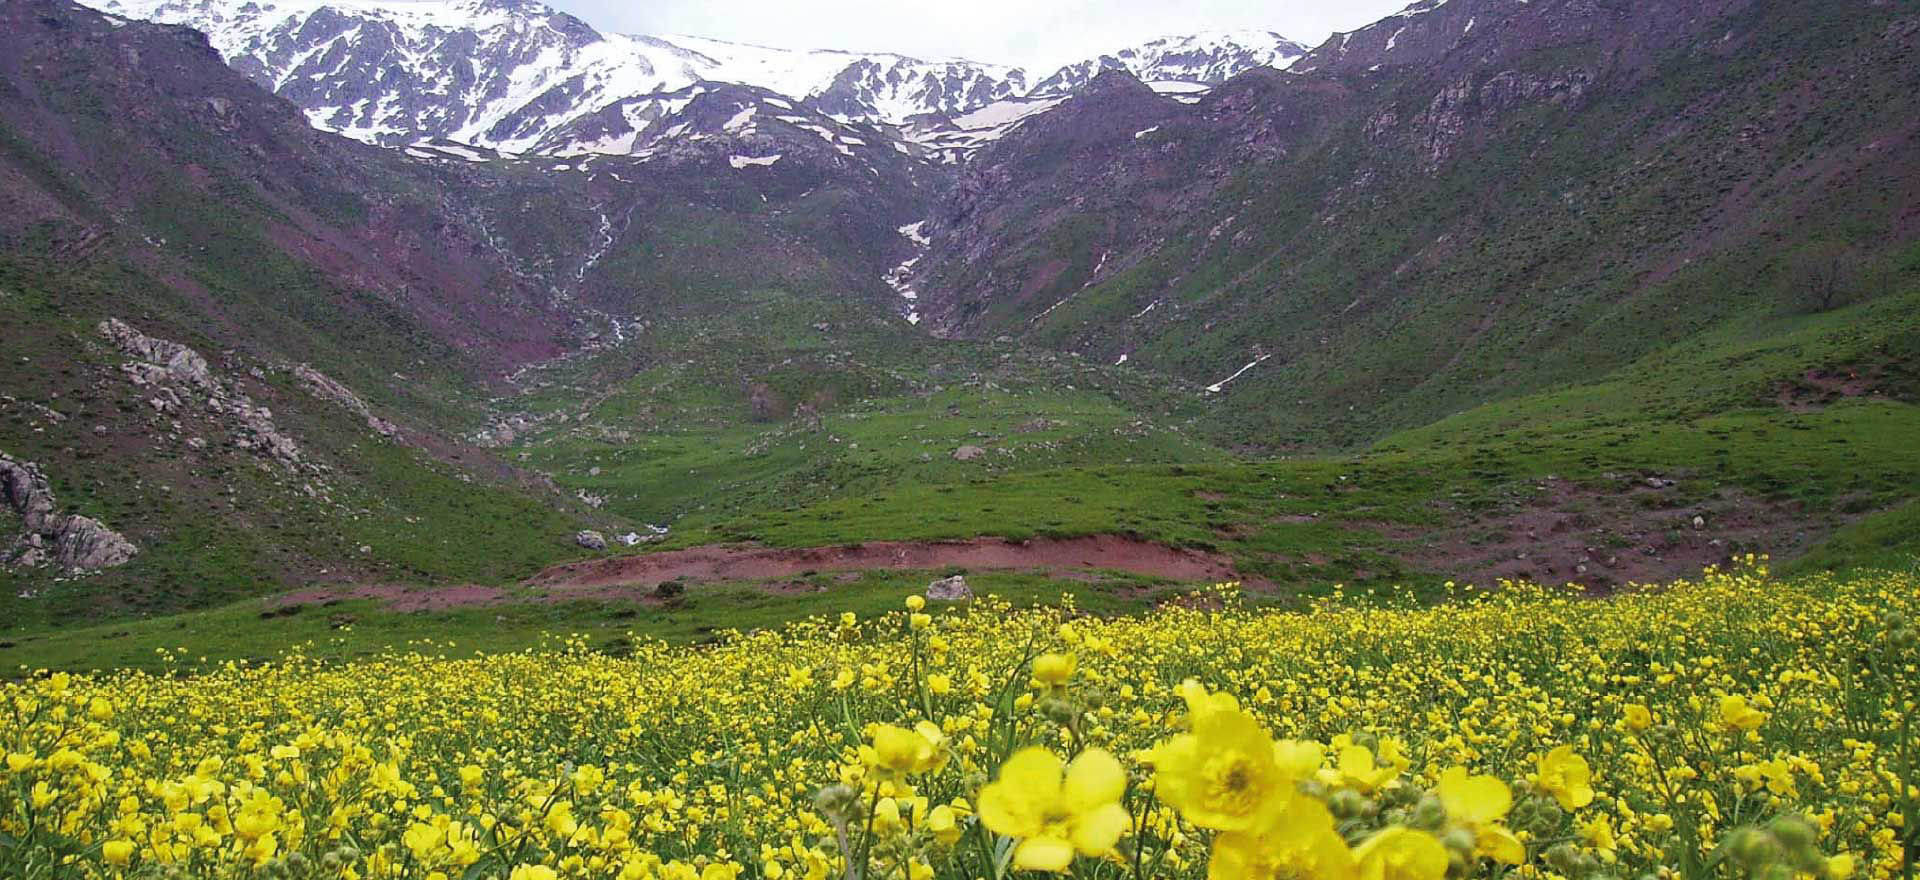 Wildflowers in the mountains of Kurdistan - Kurdistan tours and holidays